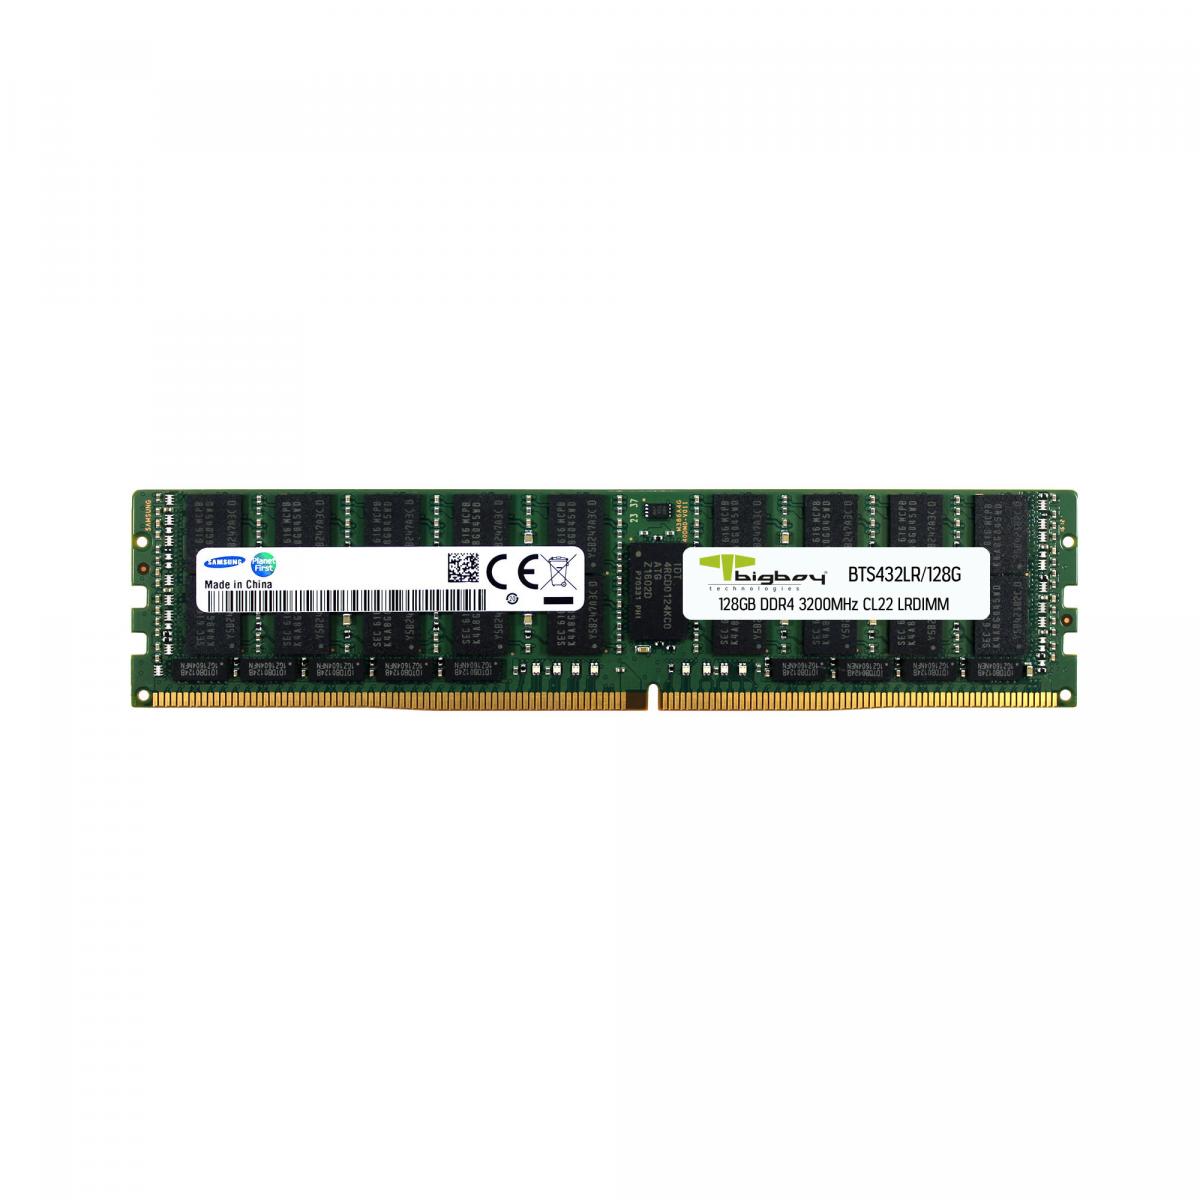 Bigboy 128GB DDR4 3200MHz CL22 LRDIMM Server Rami BTS432LR/128G